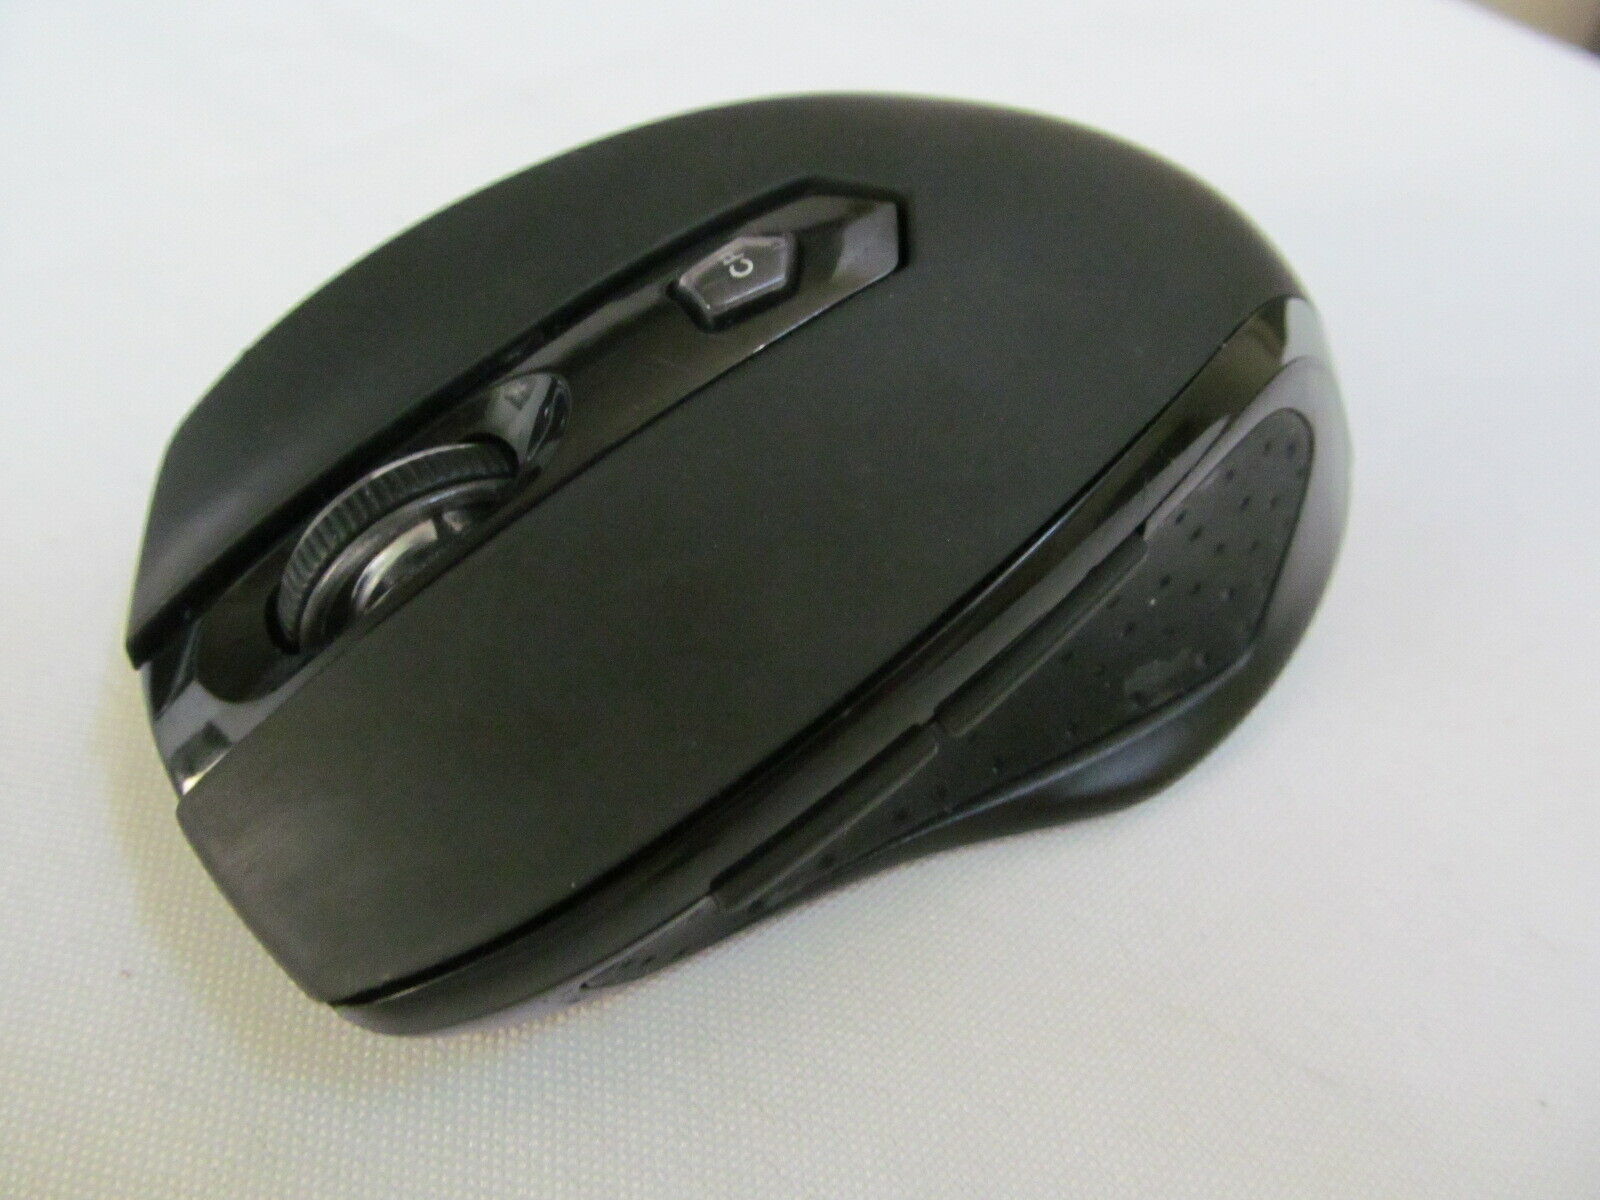 ET 2.4G D-09 Wireless OPTICAL Mouse w/3 CPI Adjustment Button 🔥NO USB Receiver